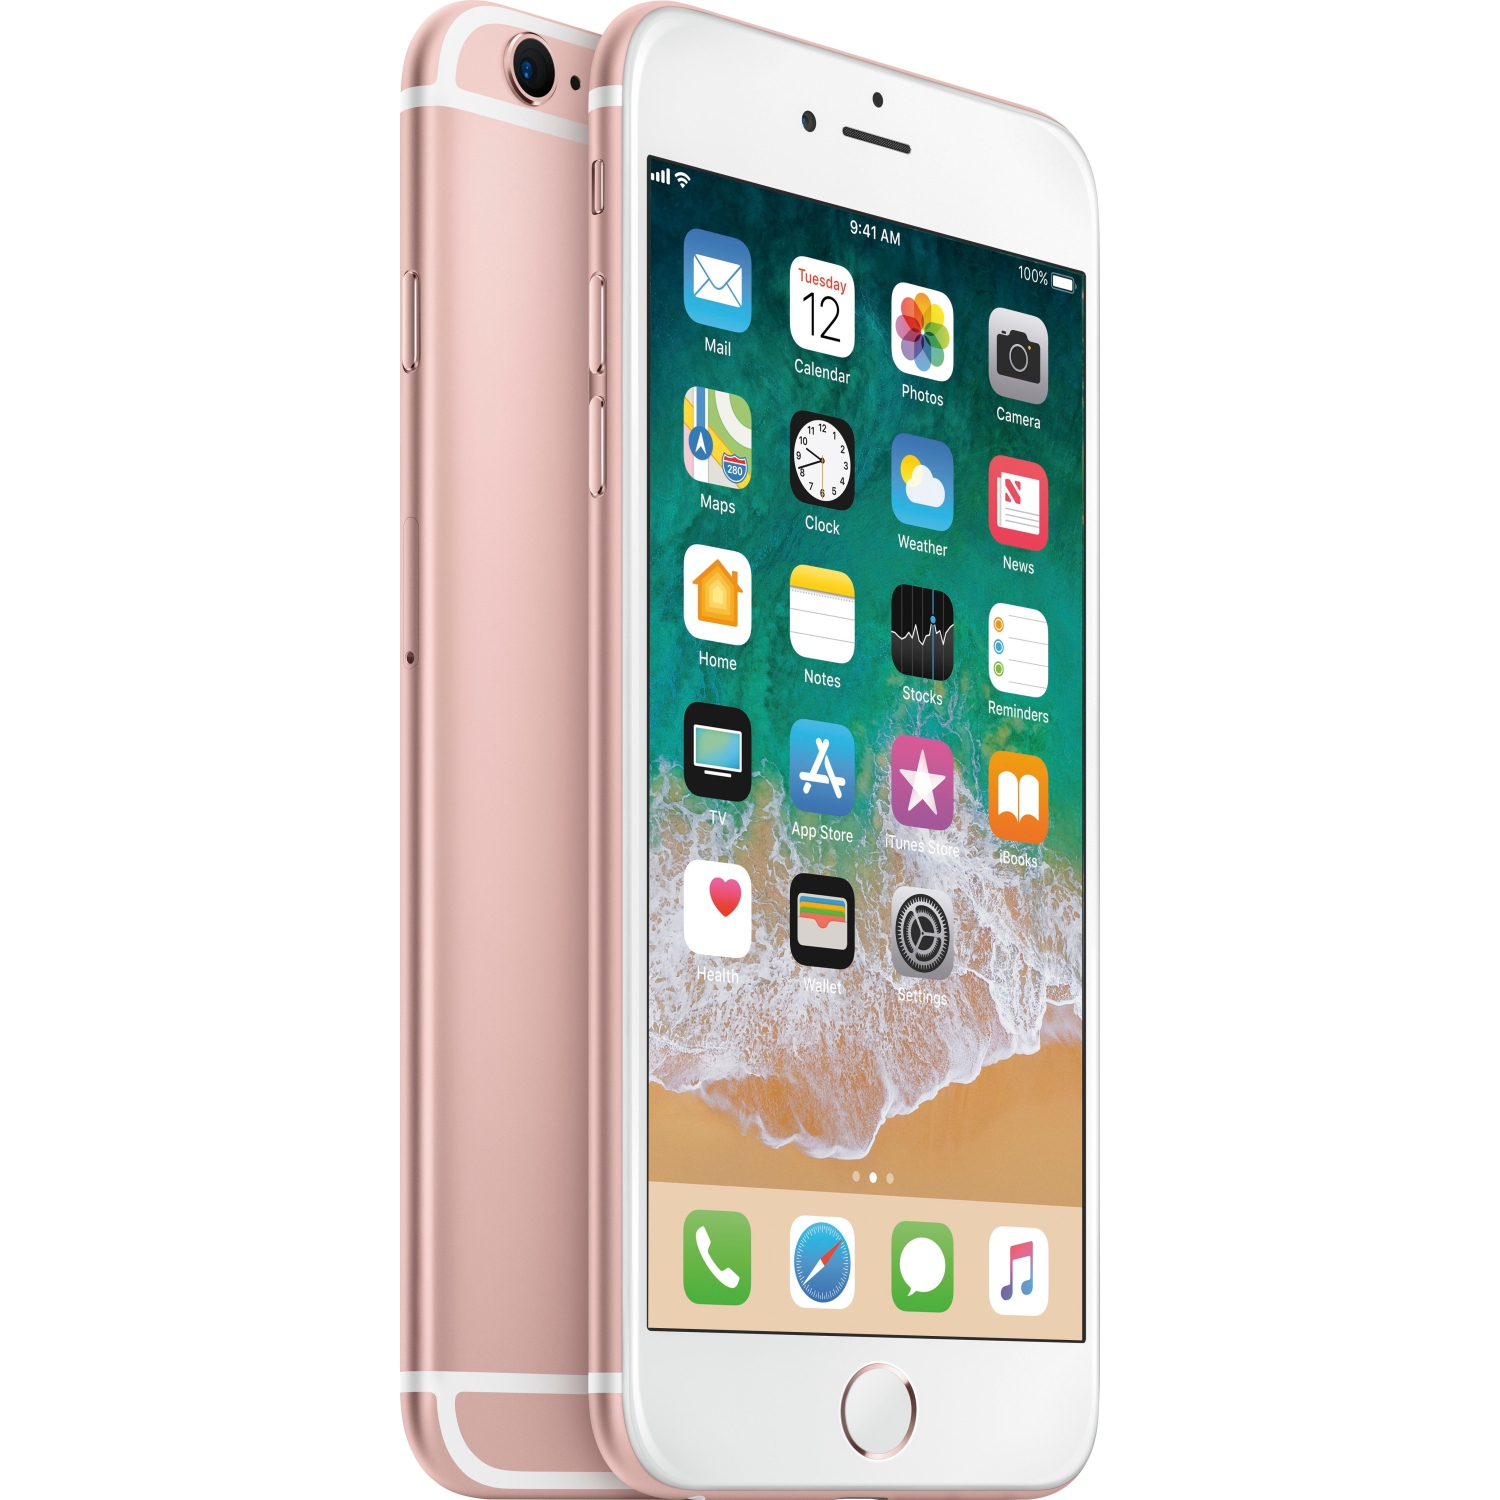 Apple iPhone 6s Plus 32GB Smartphone - Rose Gold - Unlocked - Open Box